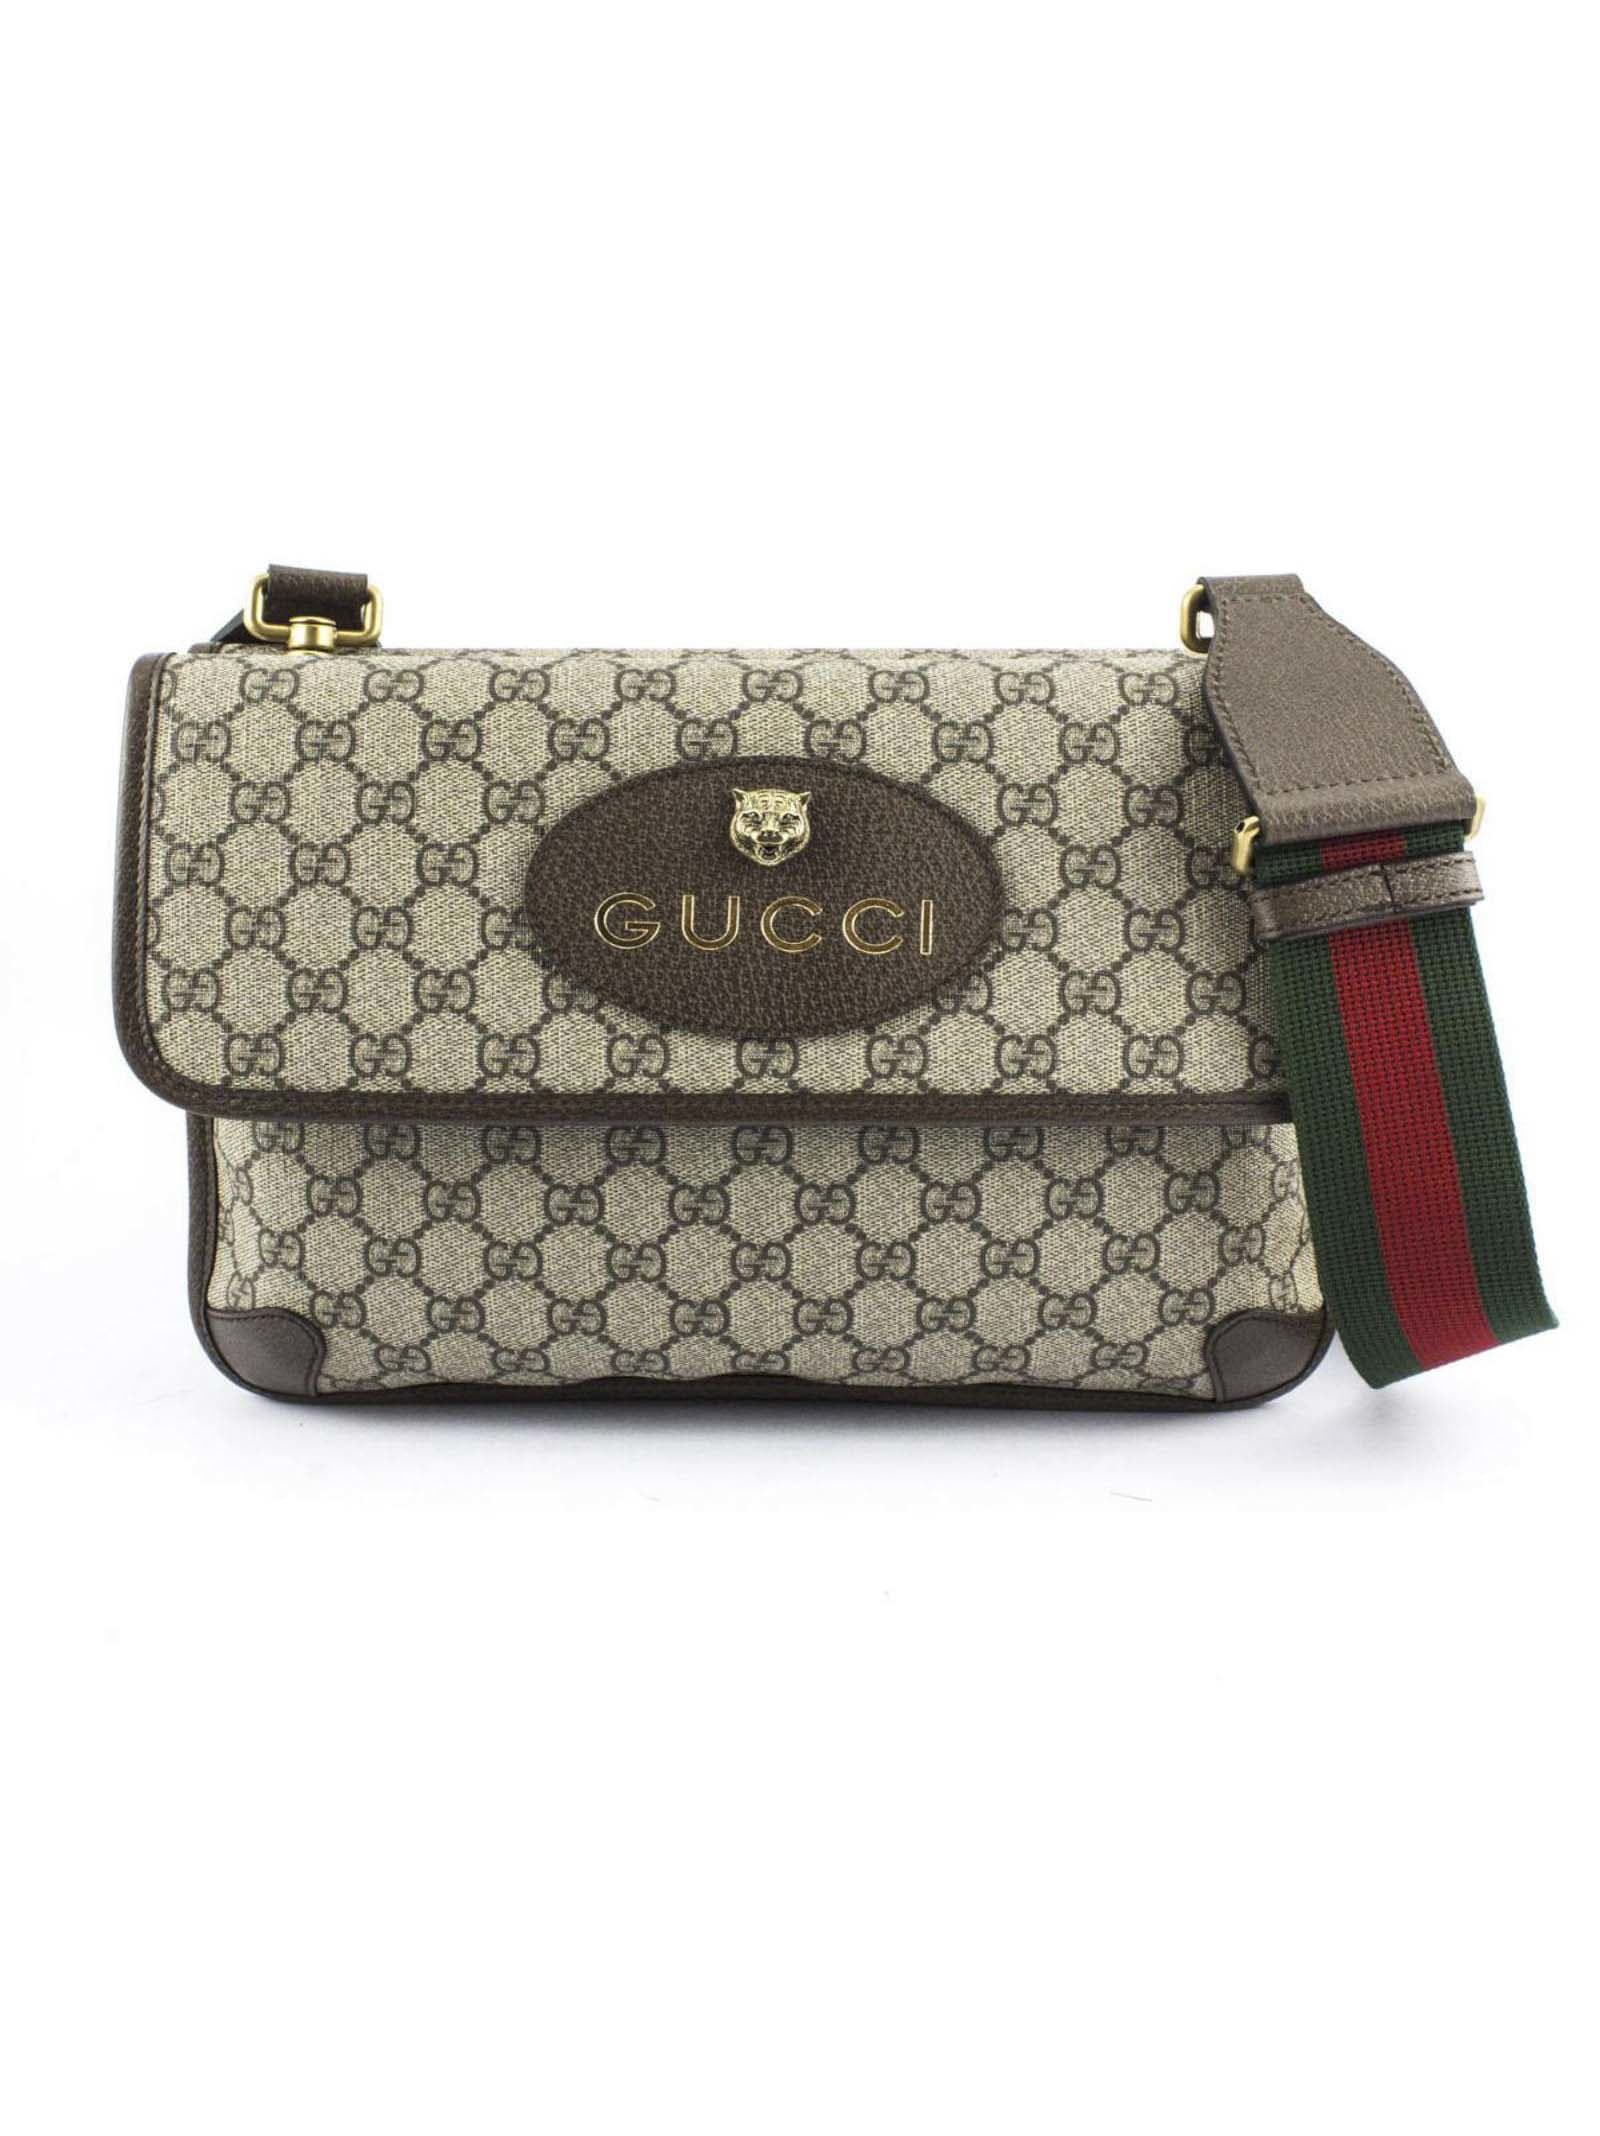 Gucci Gg Supreme Messenger Bag Dhgate | NAR Media Kit